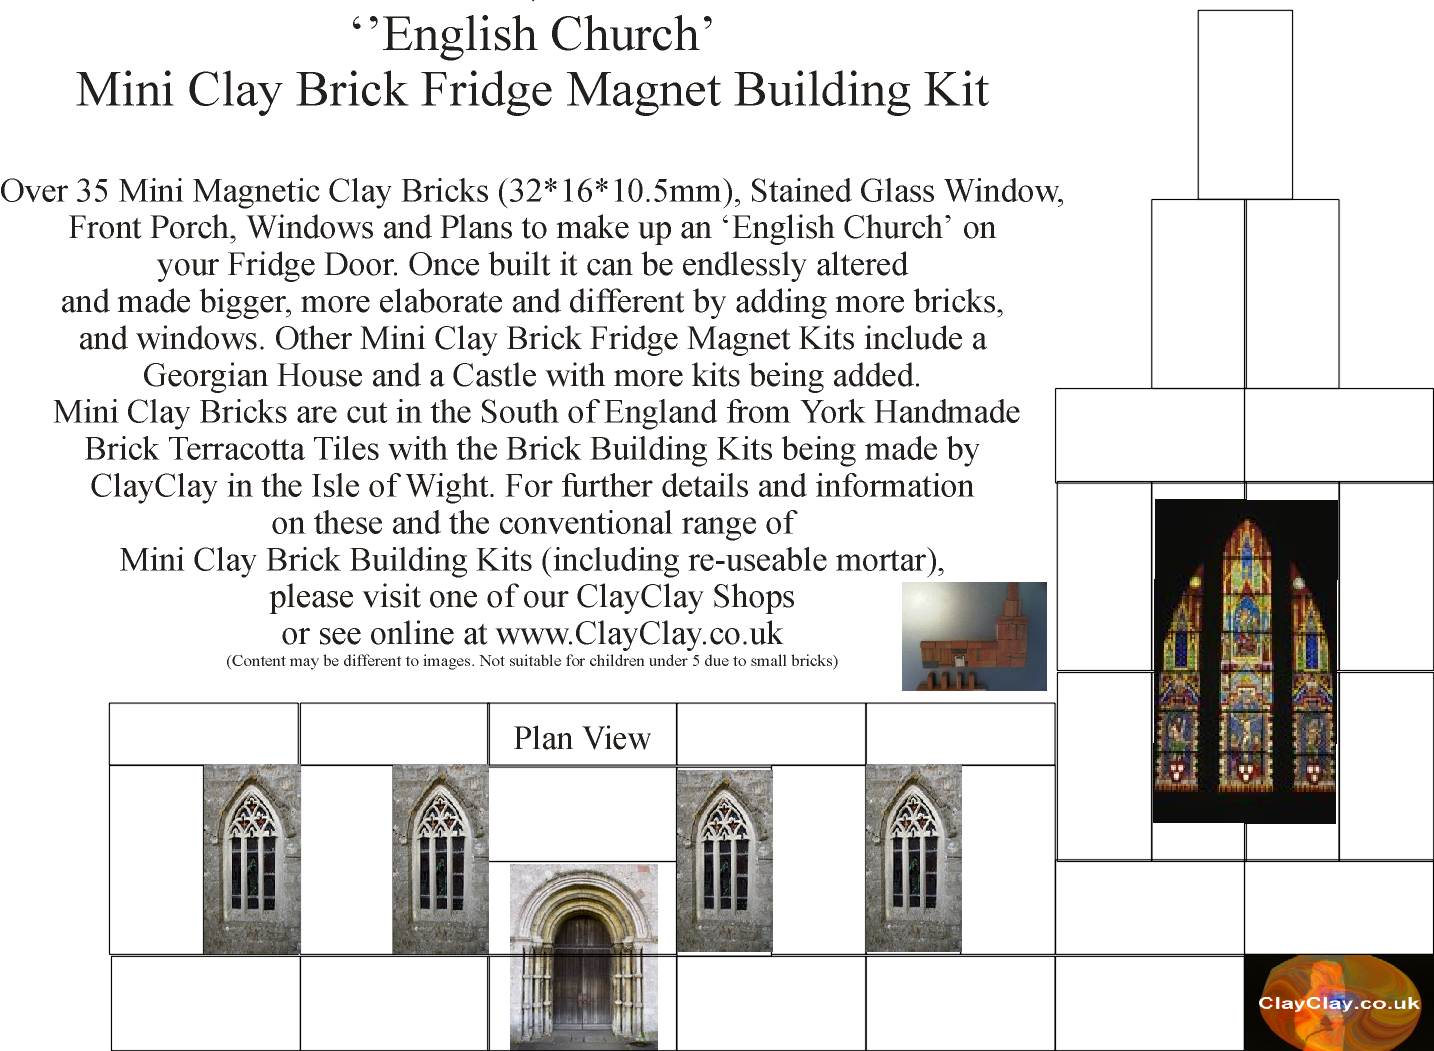 Clay Clay Miniature Brick Fridge Magnets. English Church Kit. Over 35 bricks and windows etc